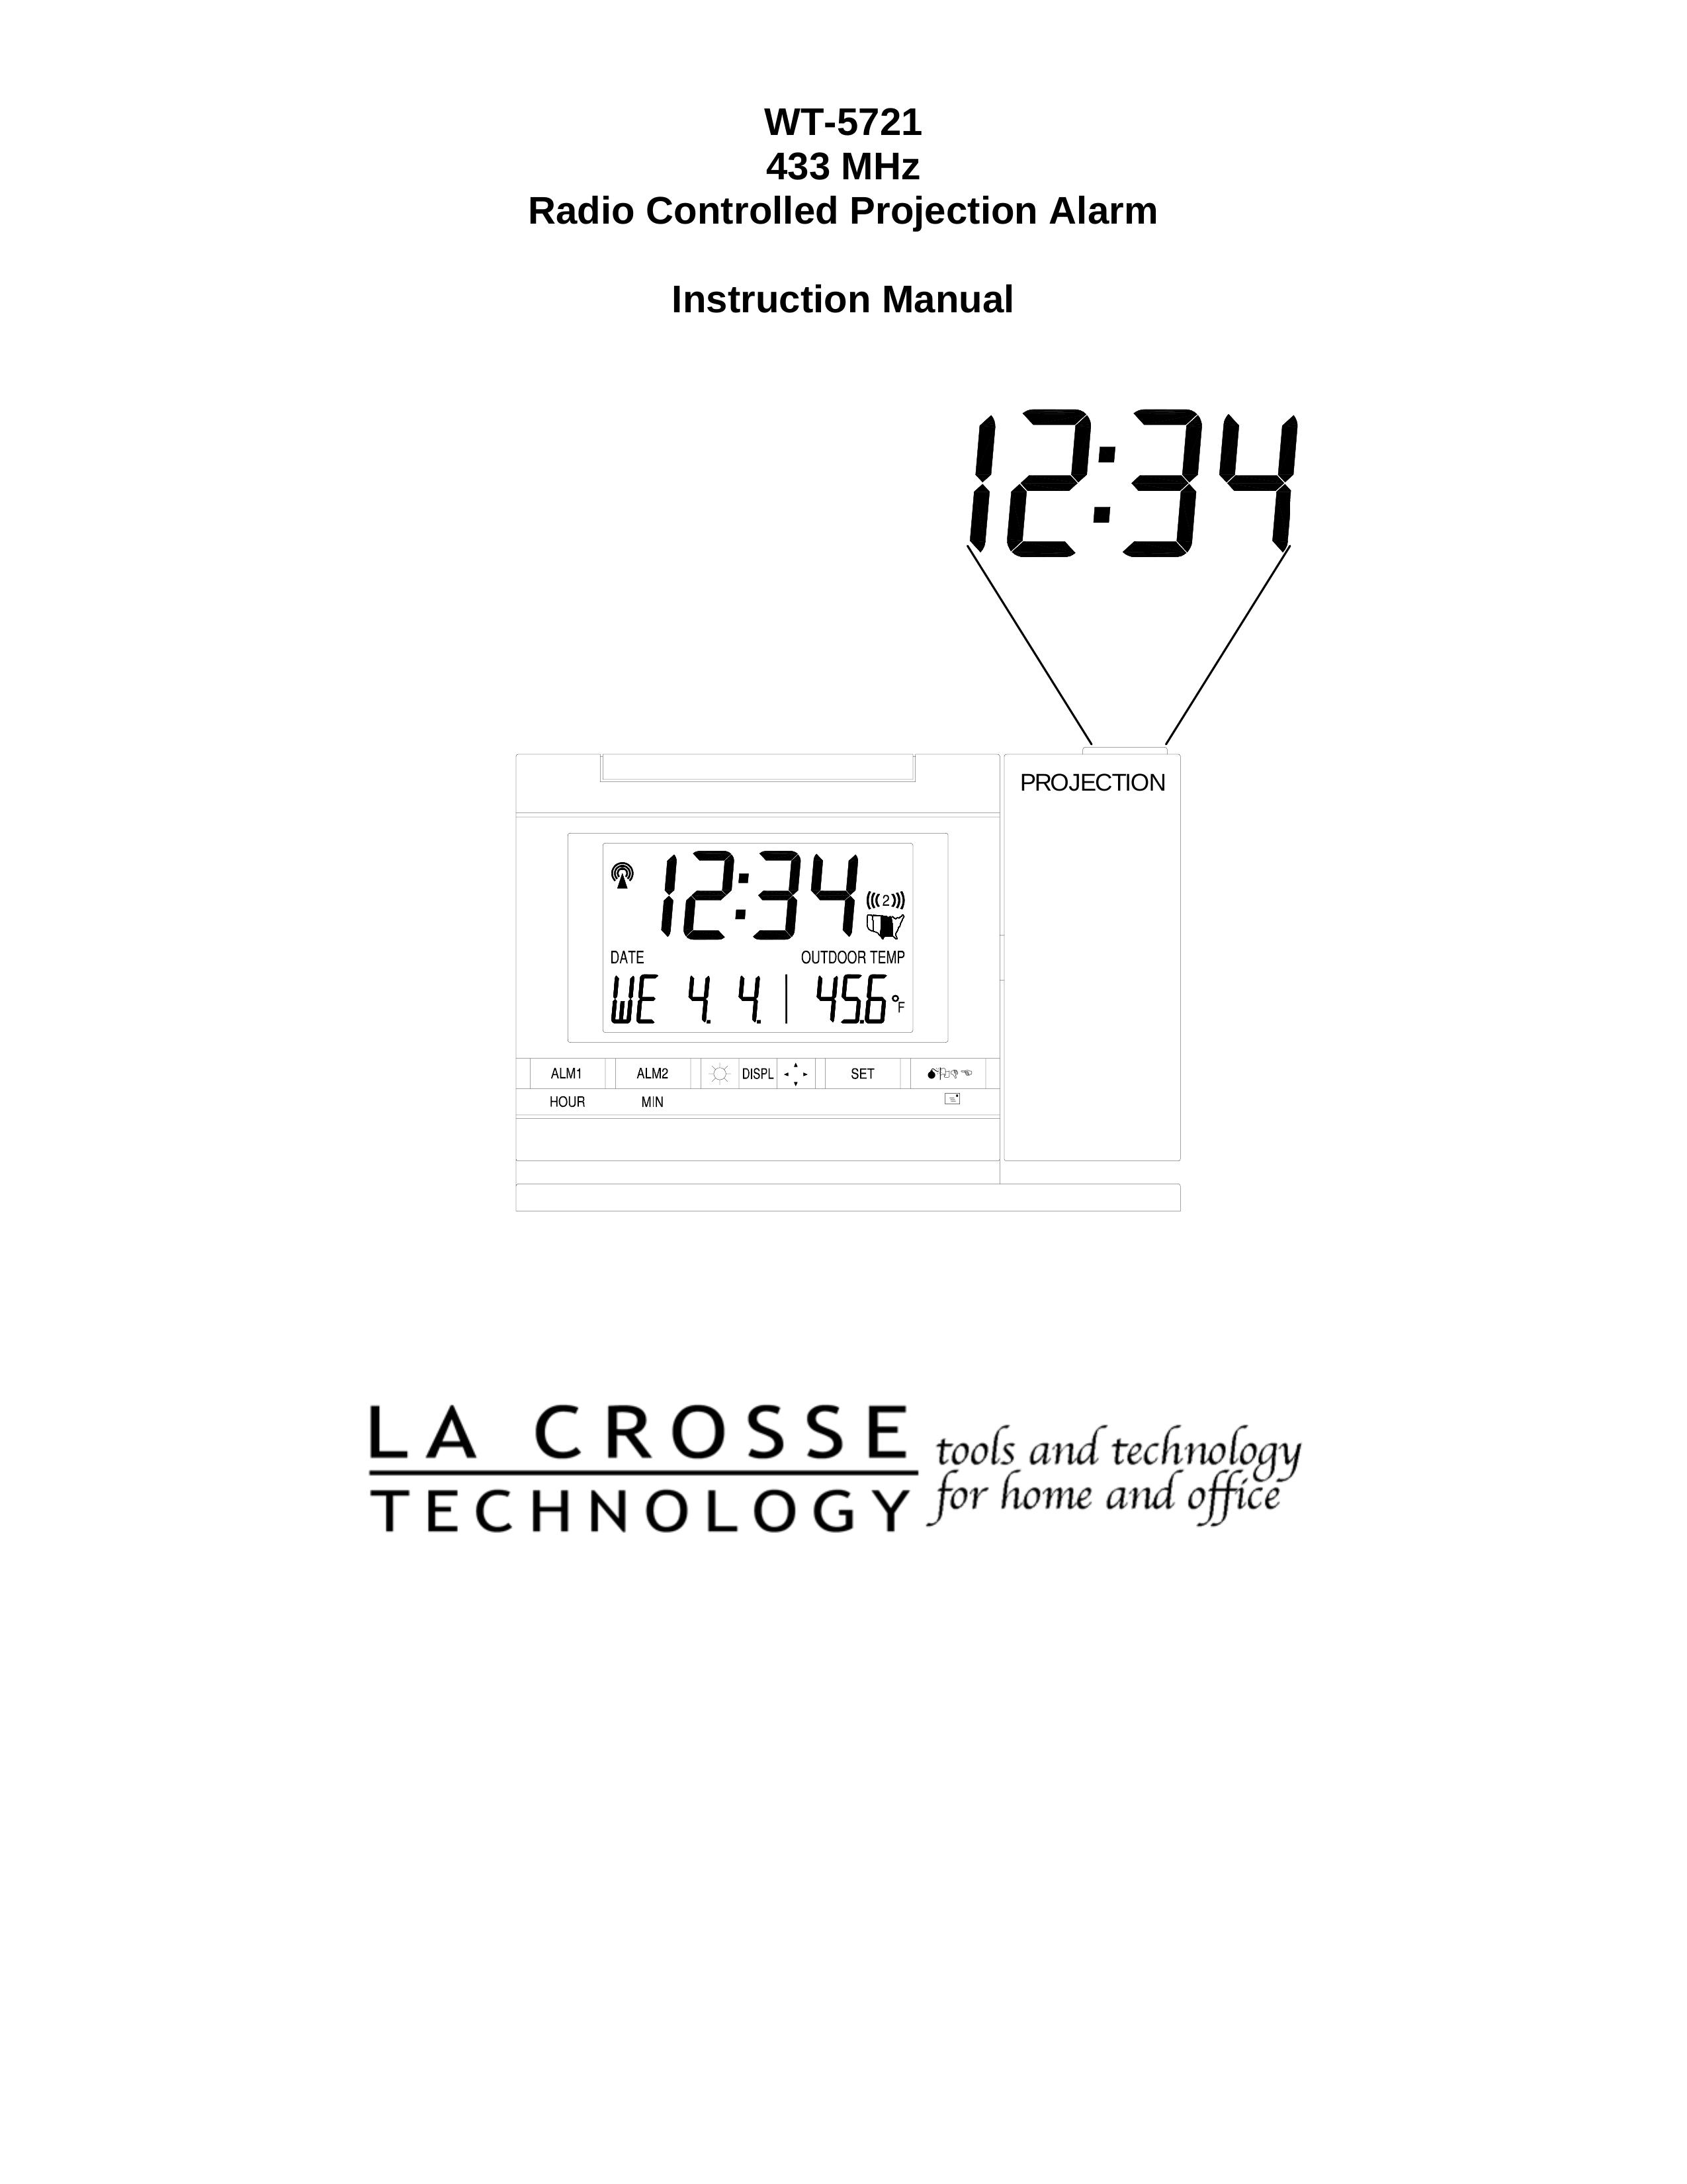 La Crosse Technology WT-5721 Clock Radio User Manual